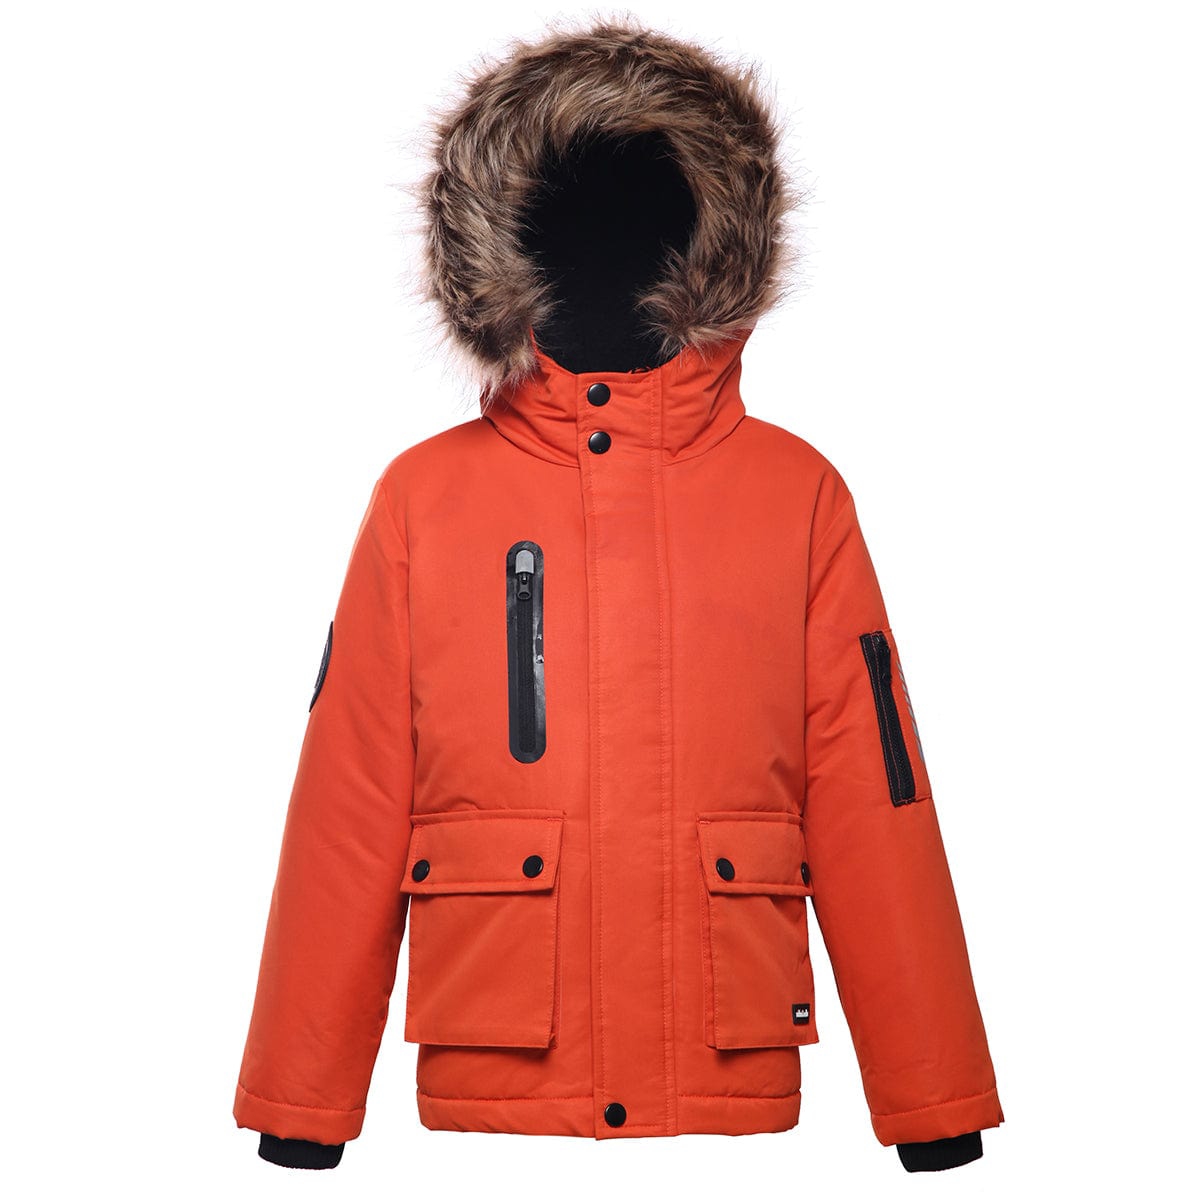 Little and Big Boys' Parka Jacket with Insulated Hood - Mandarin Orange